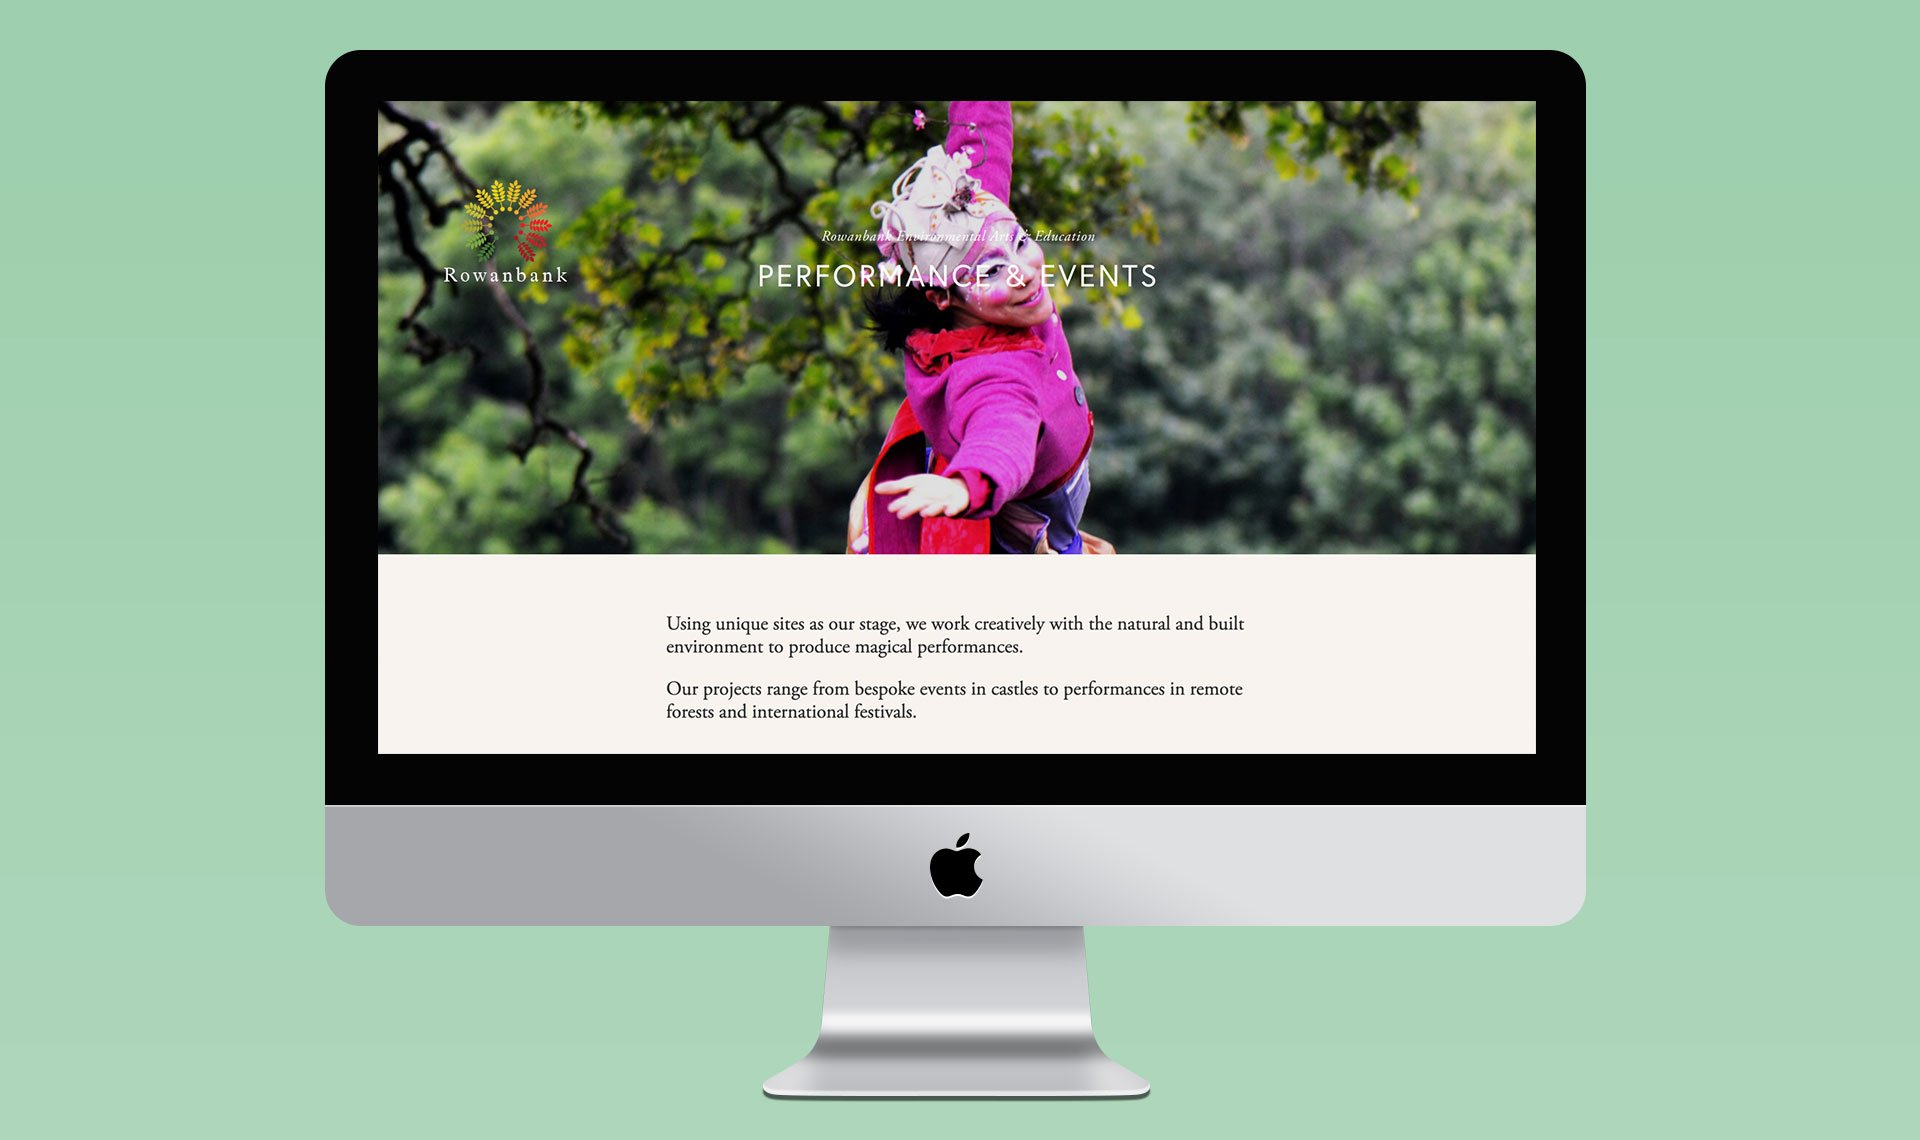 Rowanbank Environmental Arts Web design Image on an iMac Screen